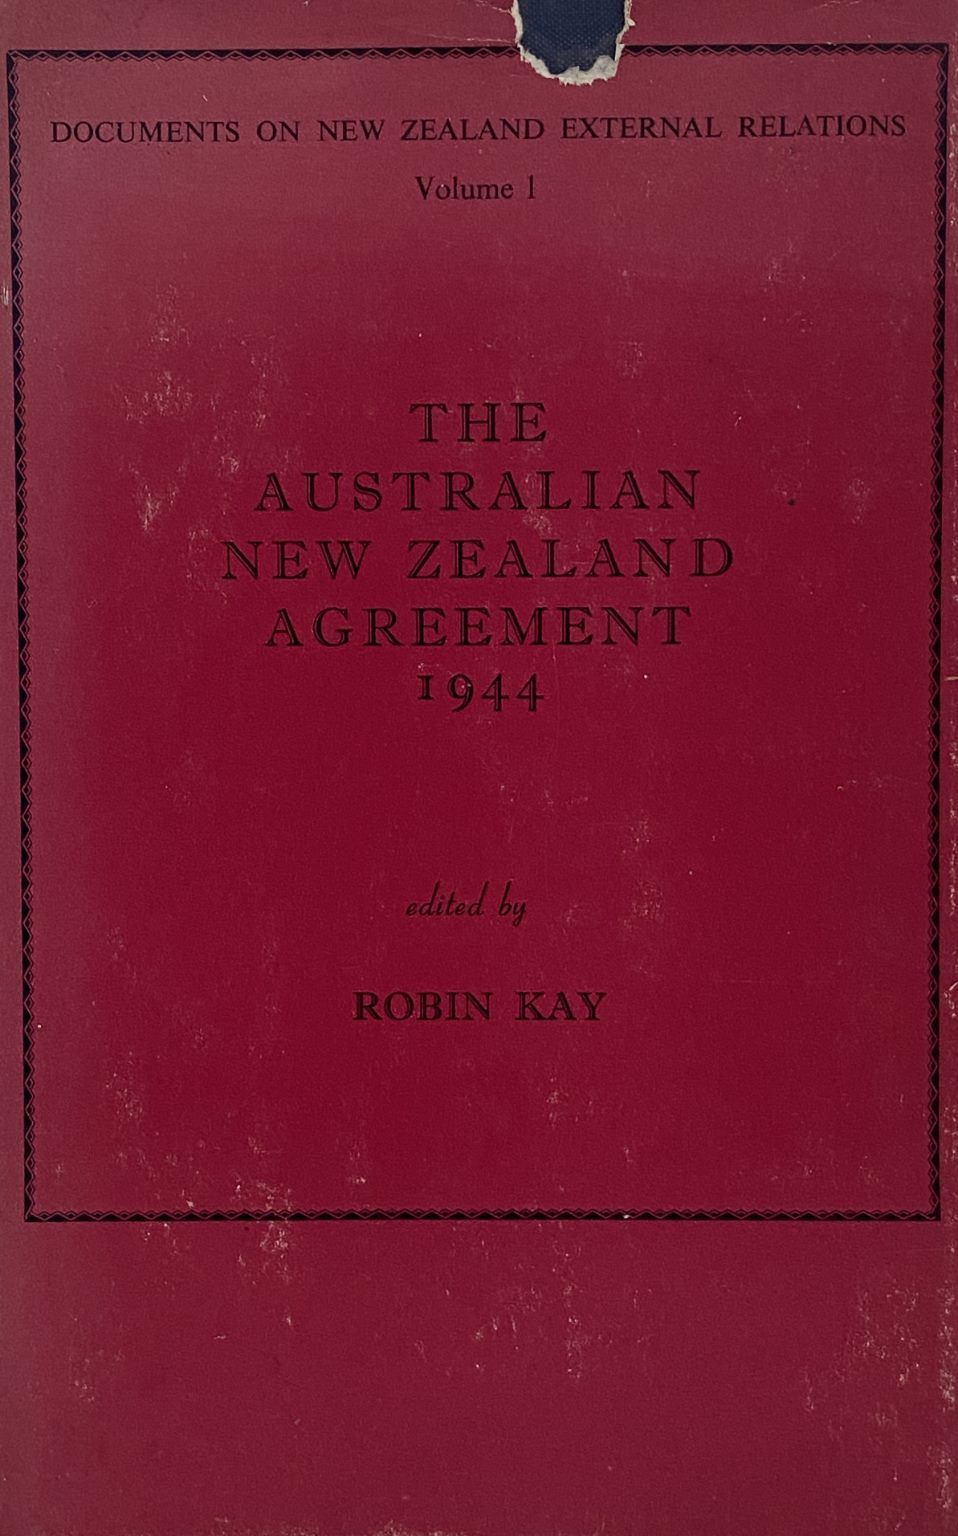 THE AUSTRALIAN NEW ZEALAND AGREEMENT 1944